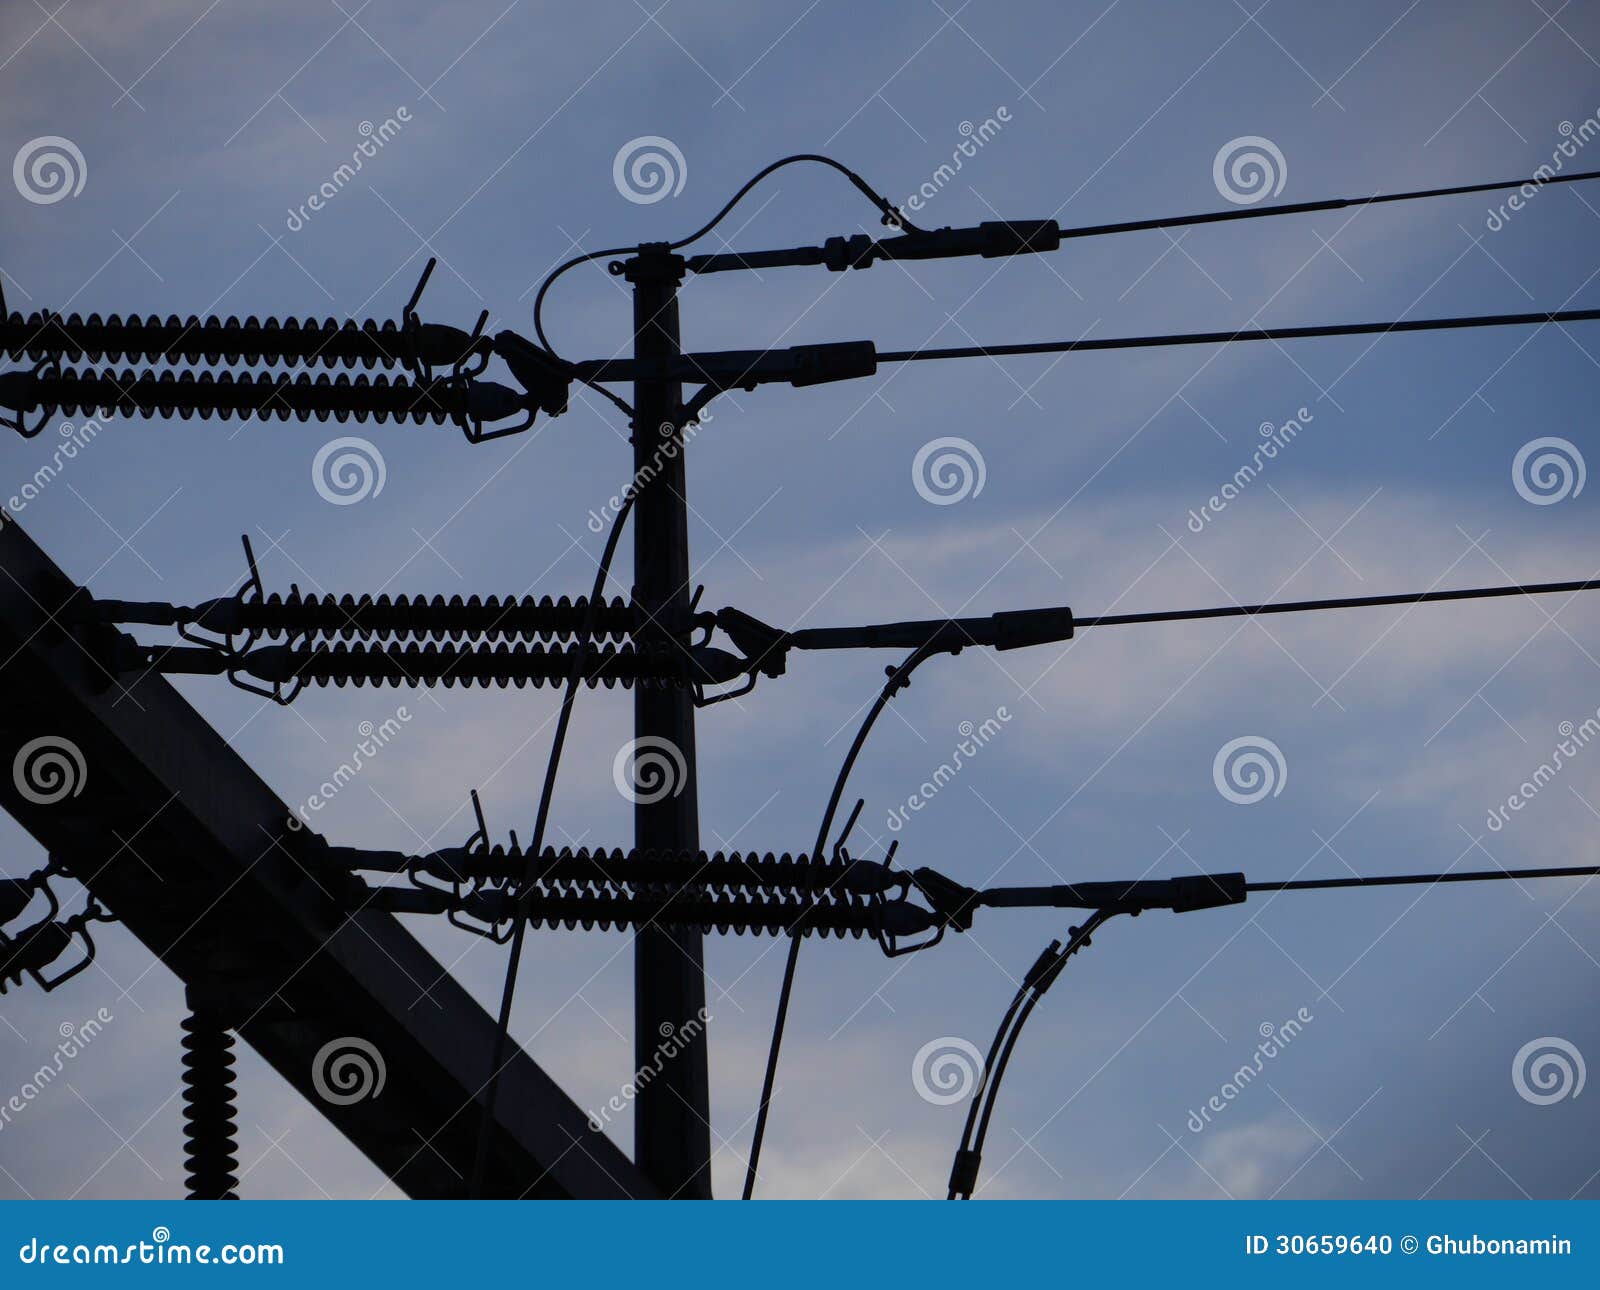 power grid clipart - photo #38